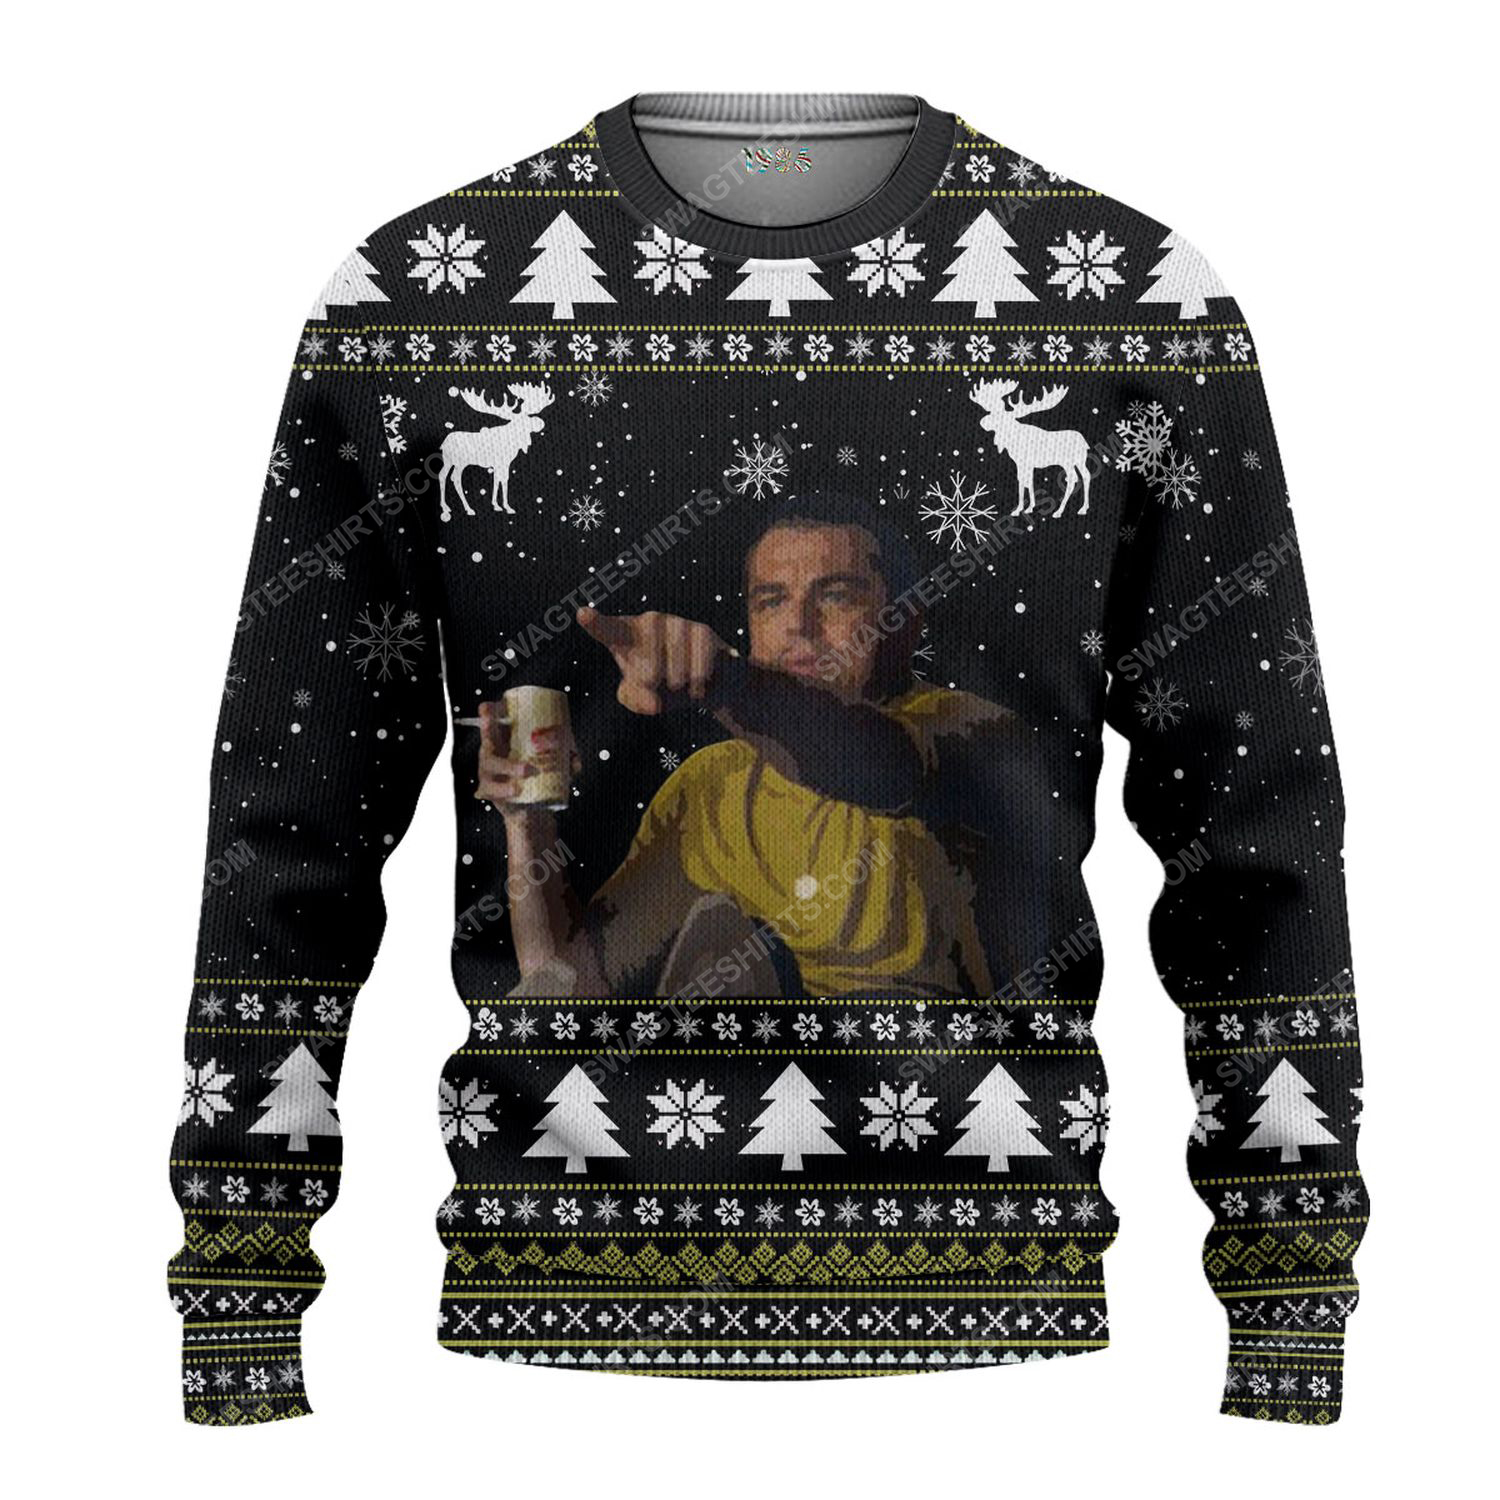 Leonardo with the glass wine meme ugly christmas sweater 1 - Copy (3)